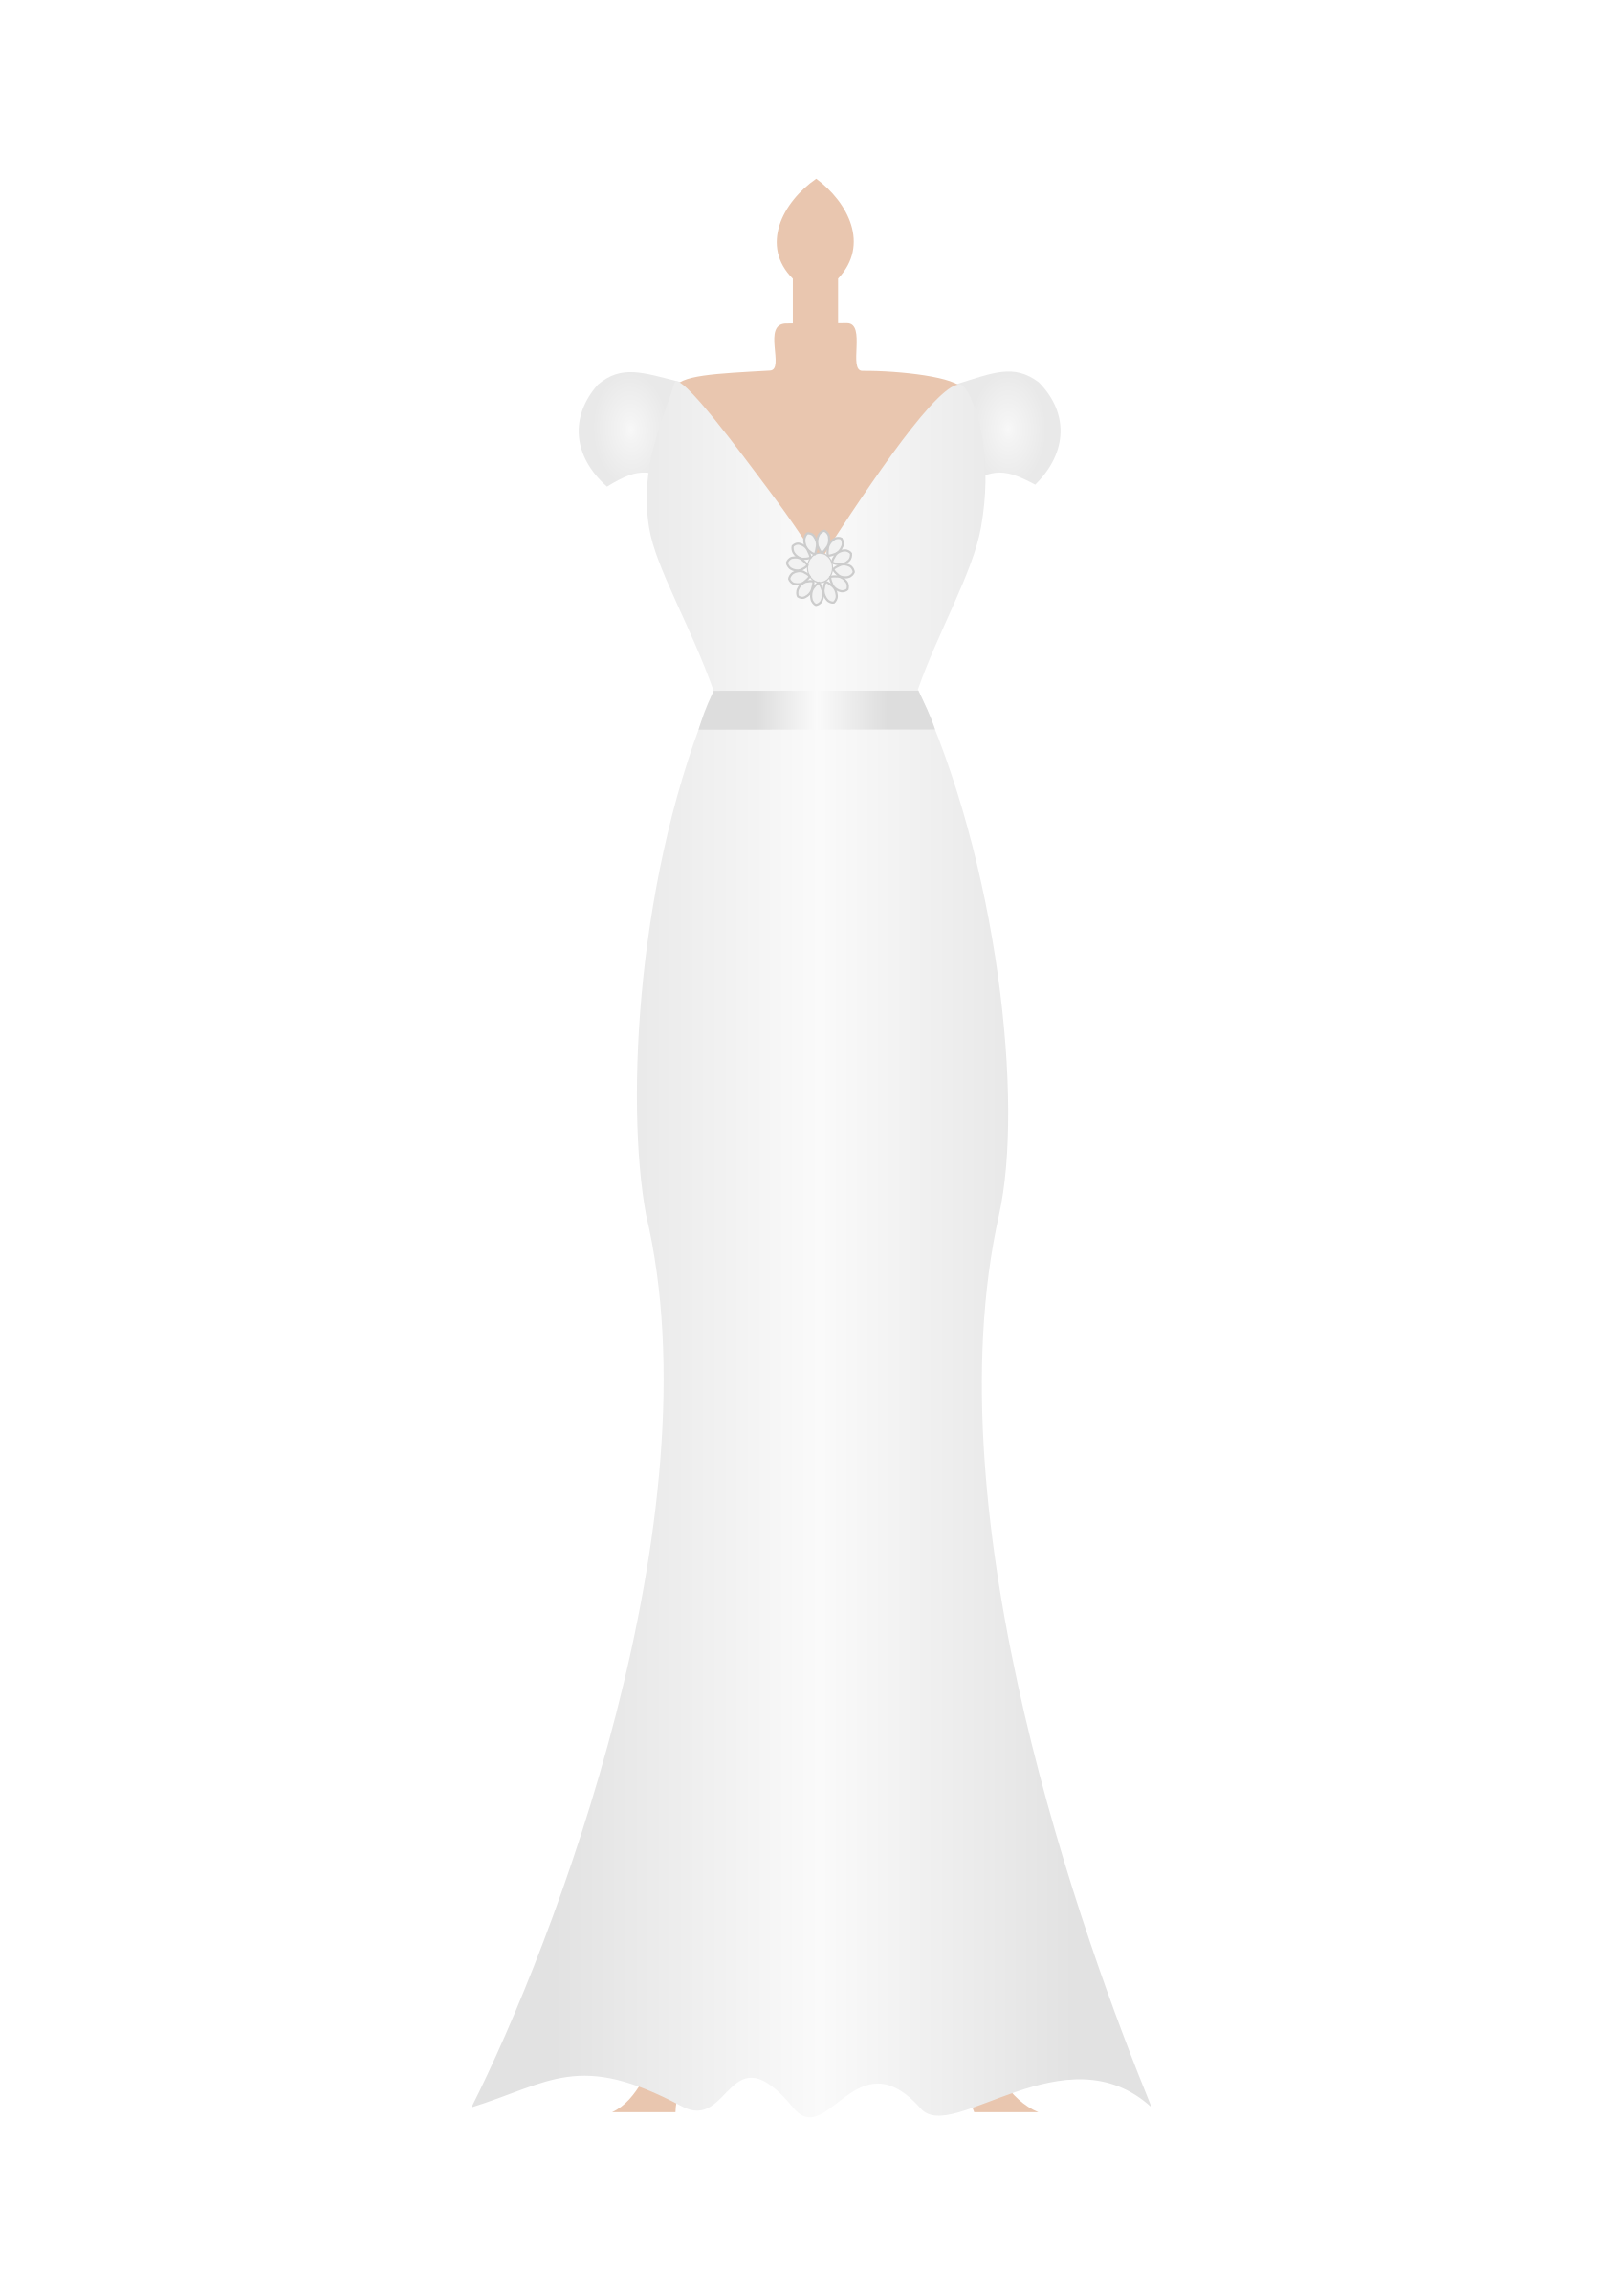 Pin Dress Clipart Wedding Dress #7 - Wedding Dress And Tux, Transparent background PNG HD thumbnail